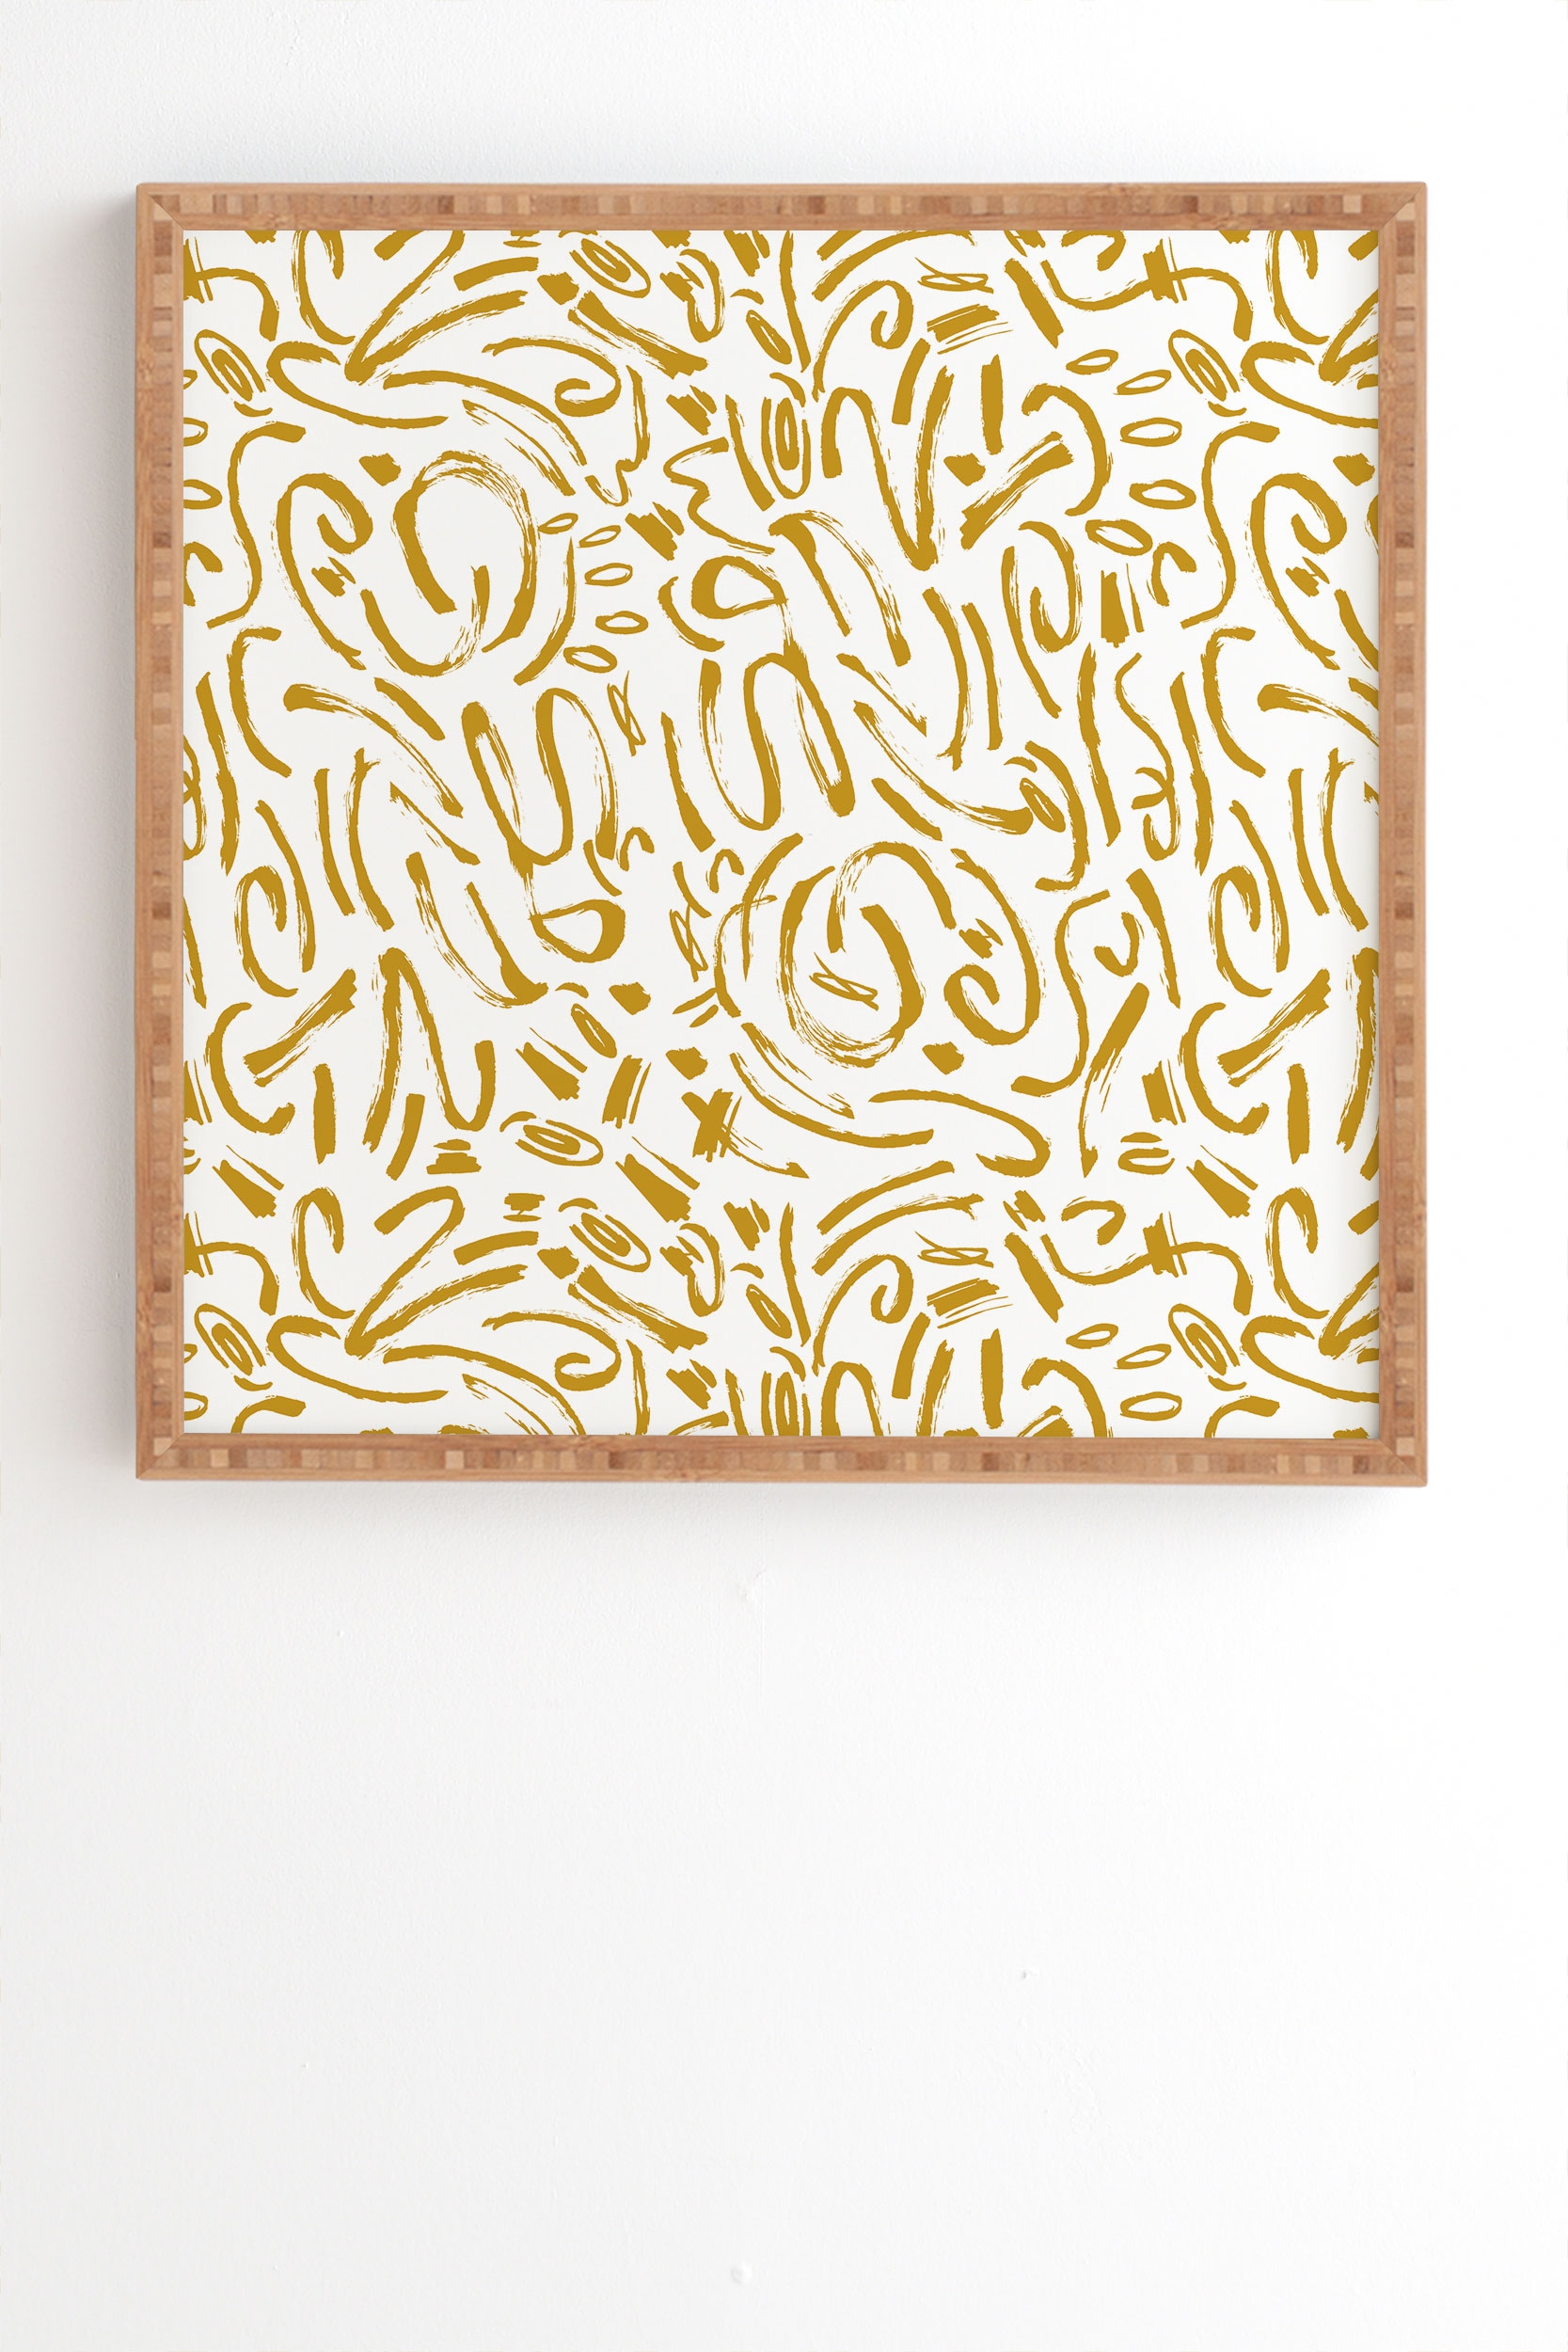 Wildness Abstract Brushstrokes by Marta Barragan Camarasa - Framed Wall Art Bamboo 14" x 16.5" - Image 1